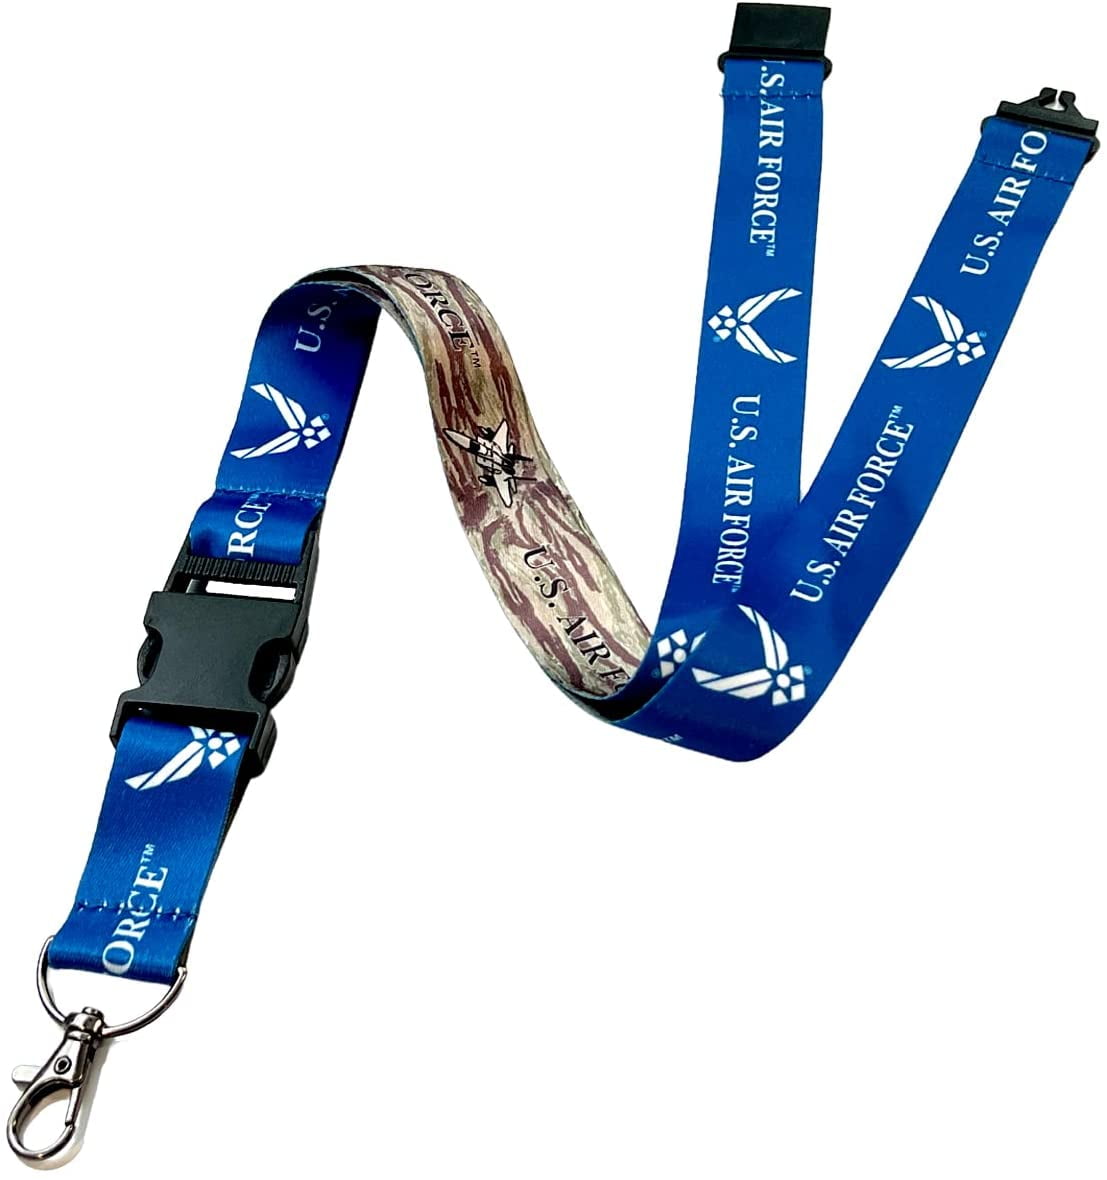 US NAVY LANYARD Key chain Neck strap ID Holder Breakaway clasp Reversible Blue 